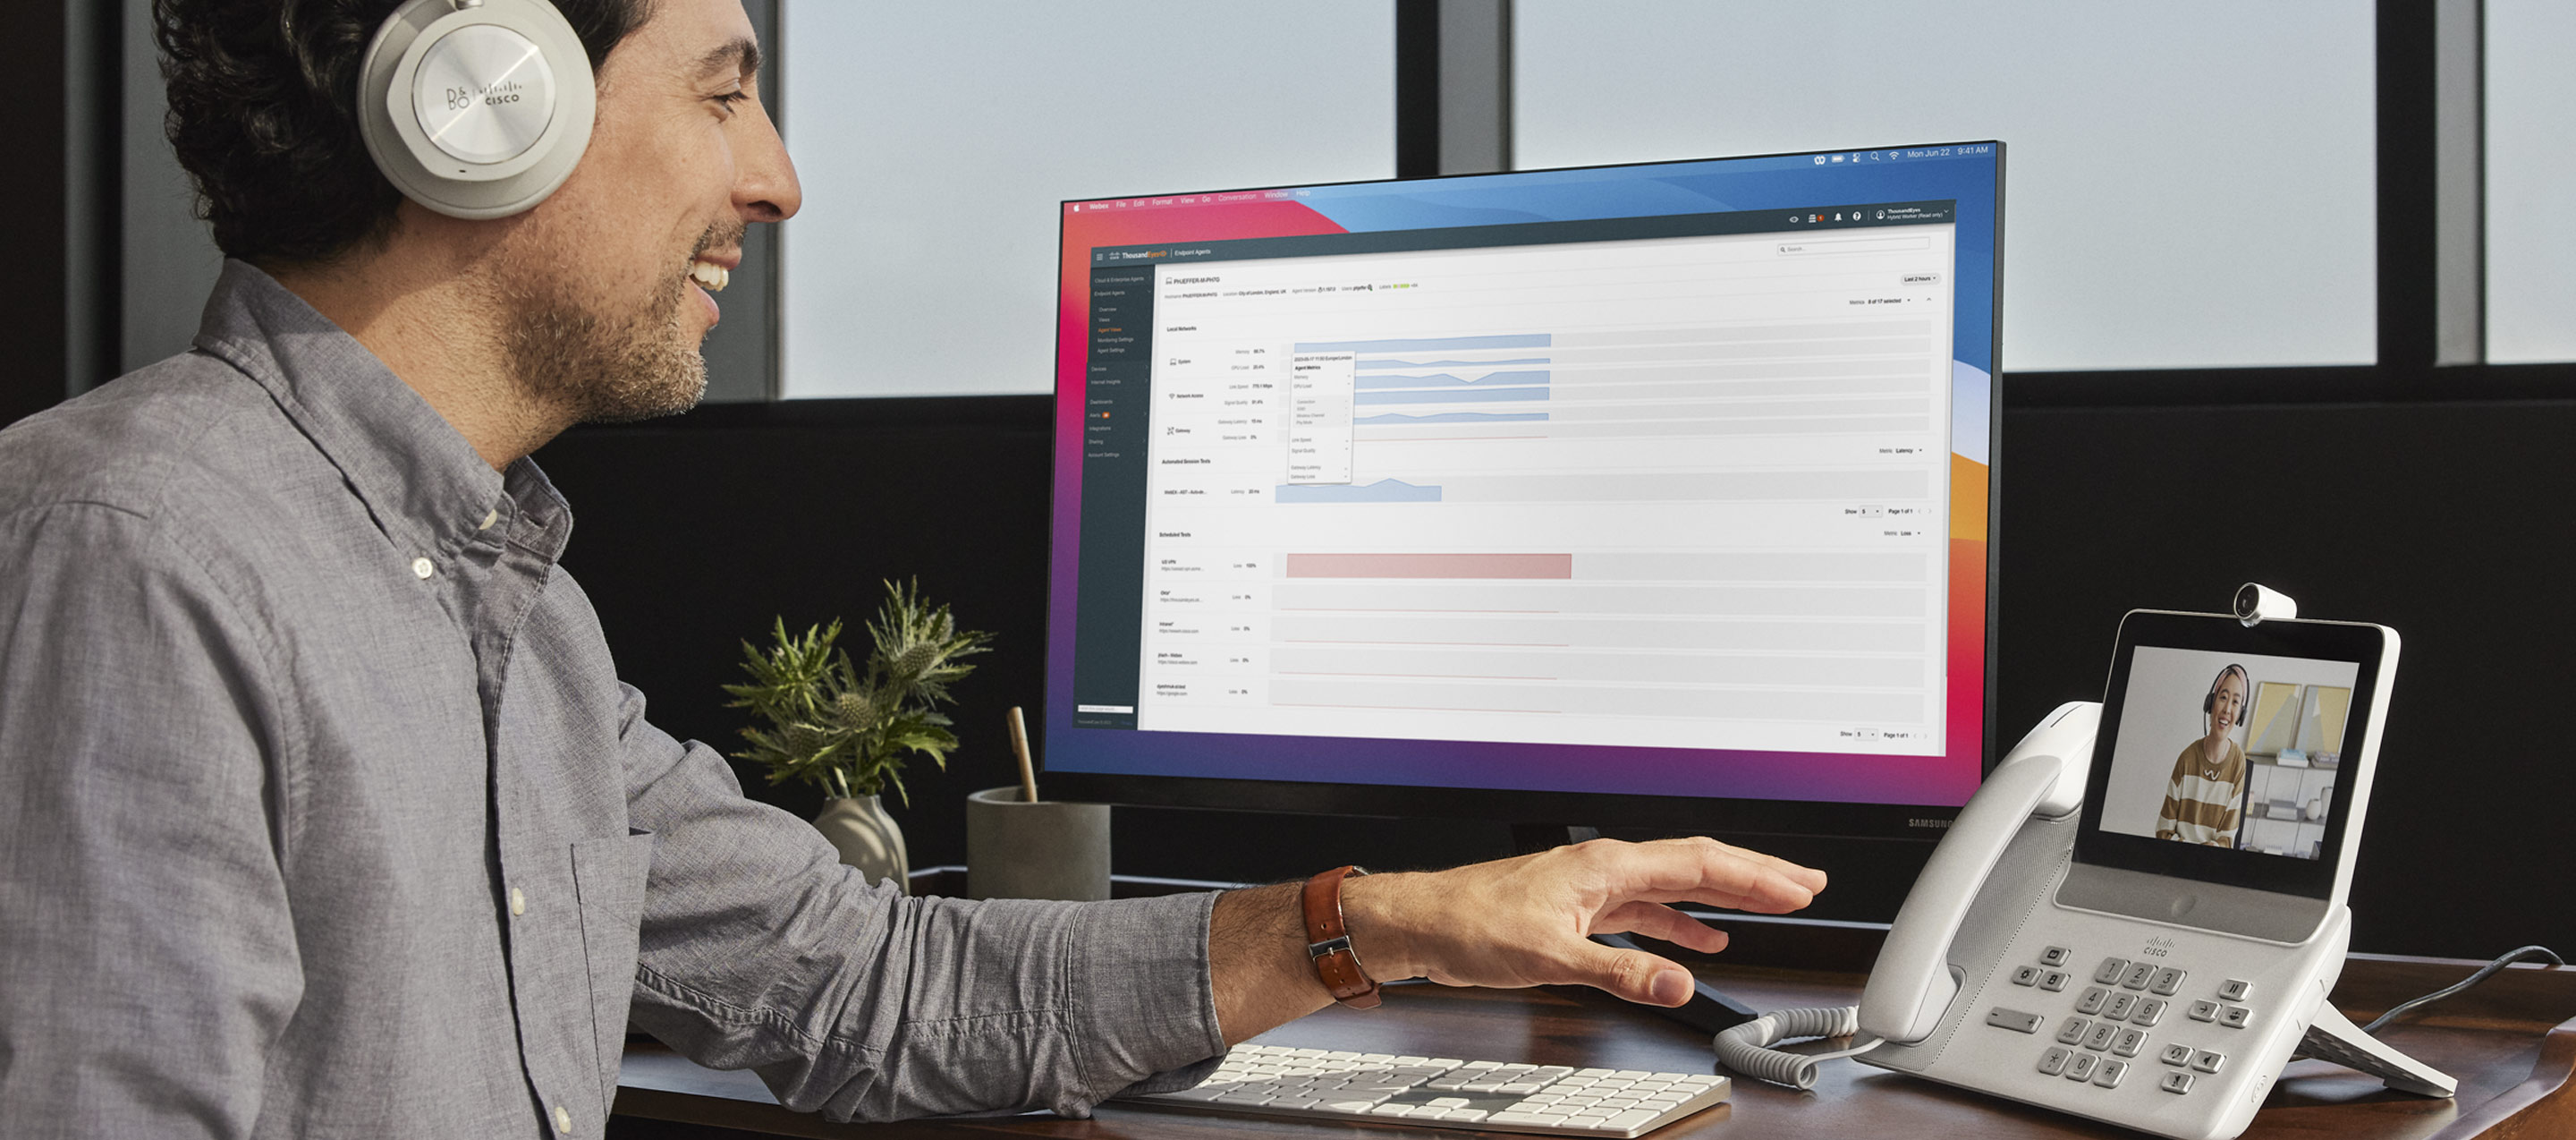 Employee uses Control Hub ThousandEyes integration on desktop monitor at workstation.